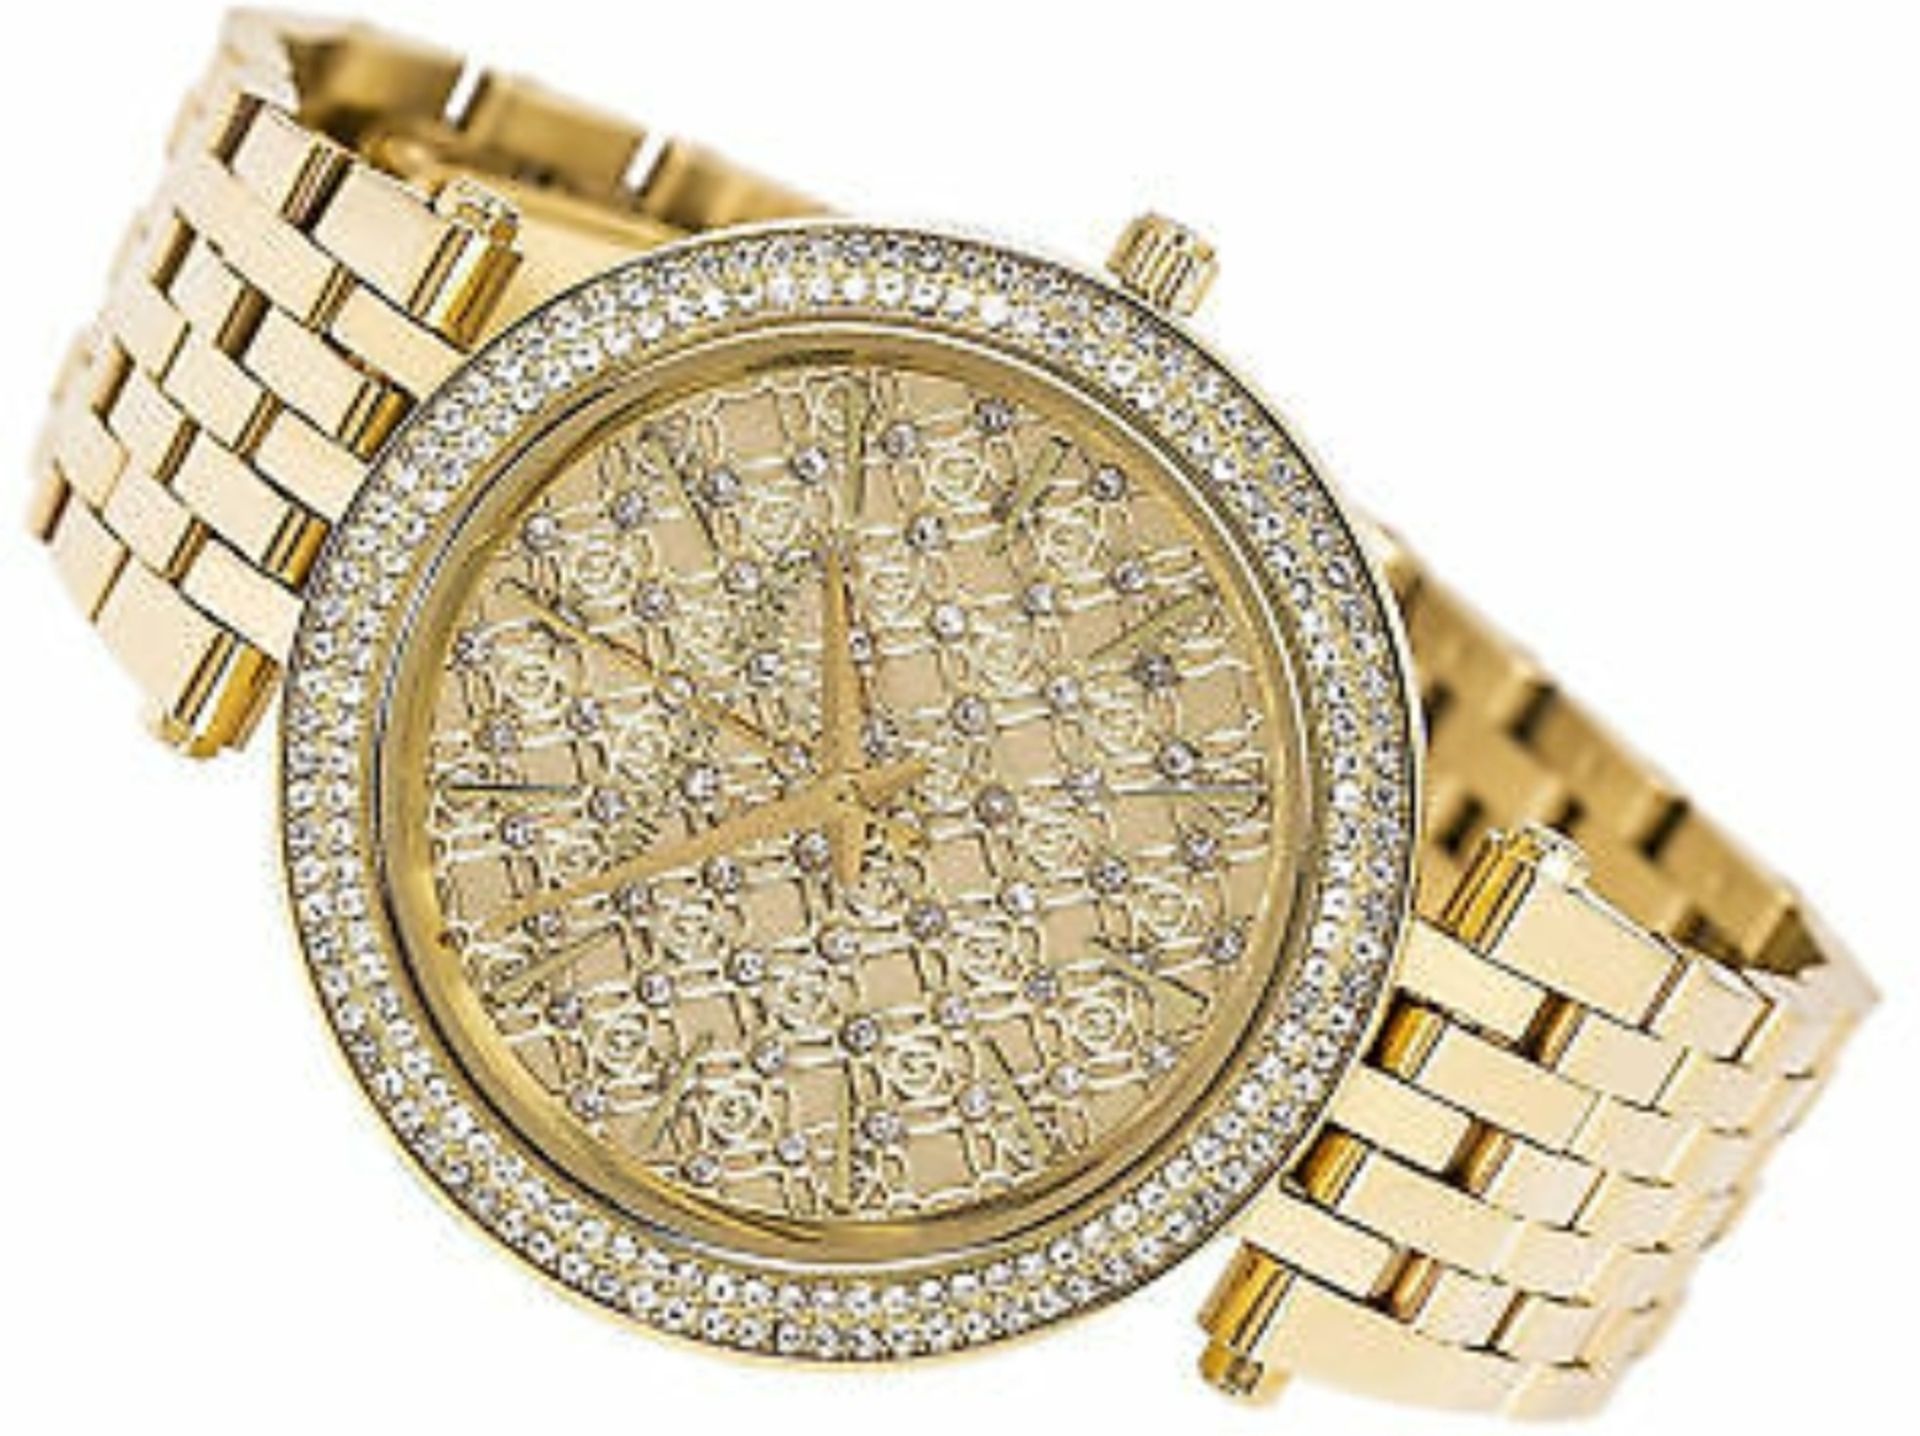 Michael Kors MK3398 Darci Gold-Tone Stainless Steel Ladies Watch - Image 5 of 6